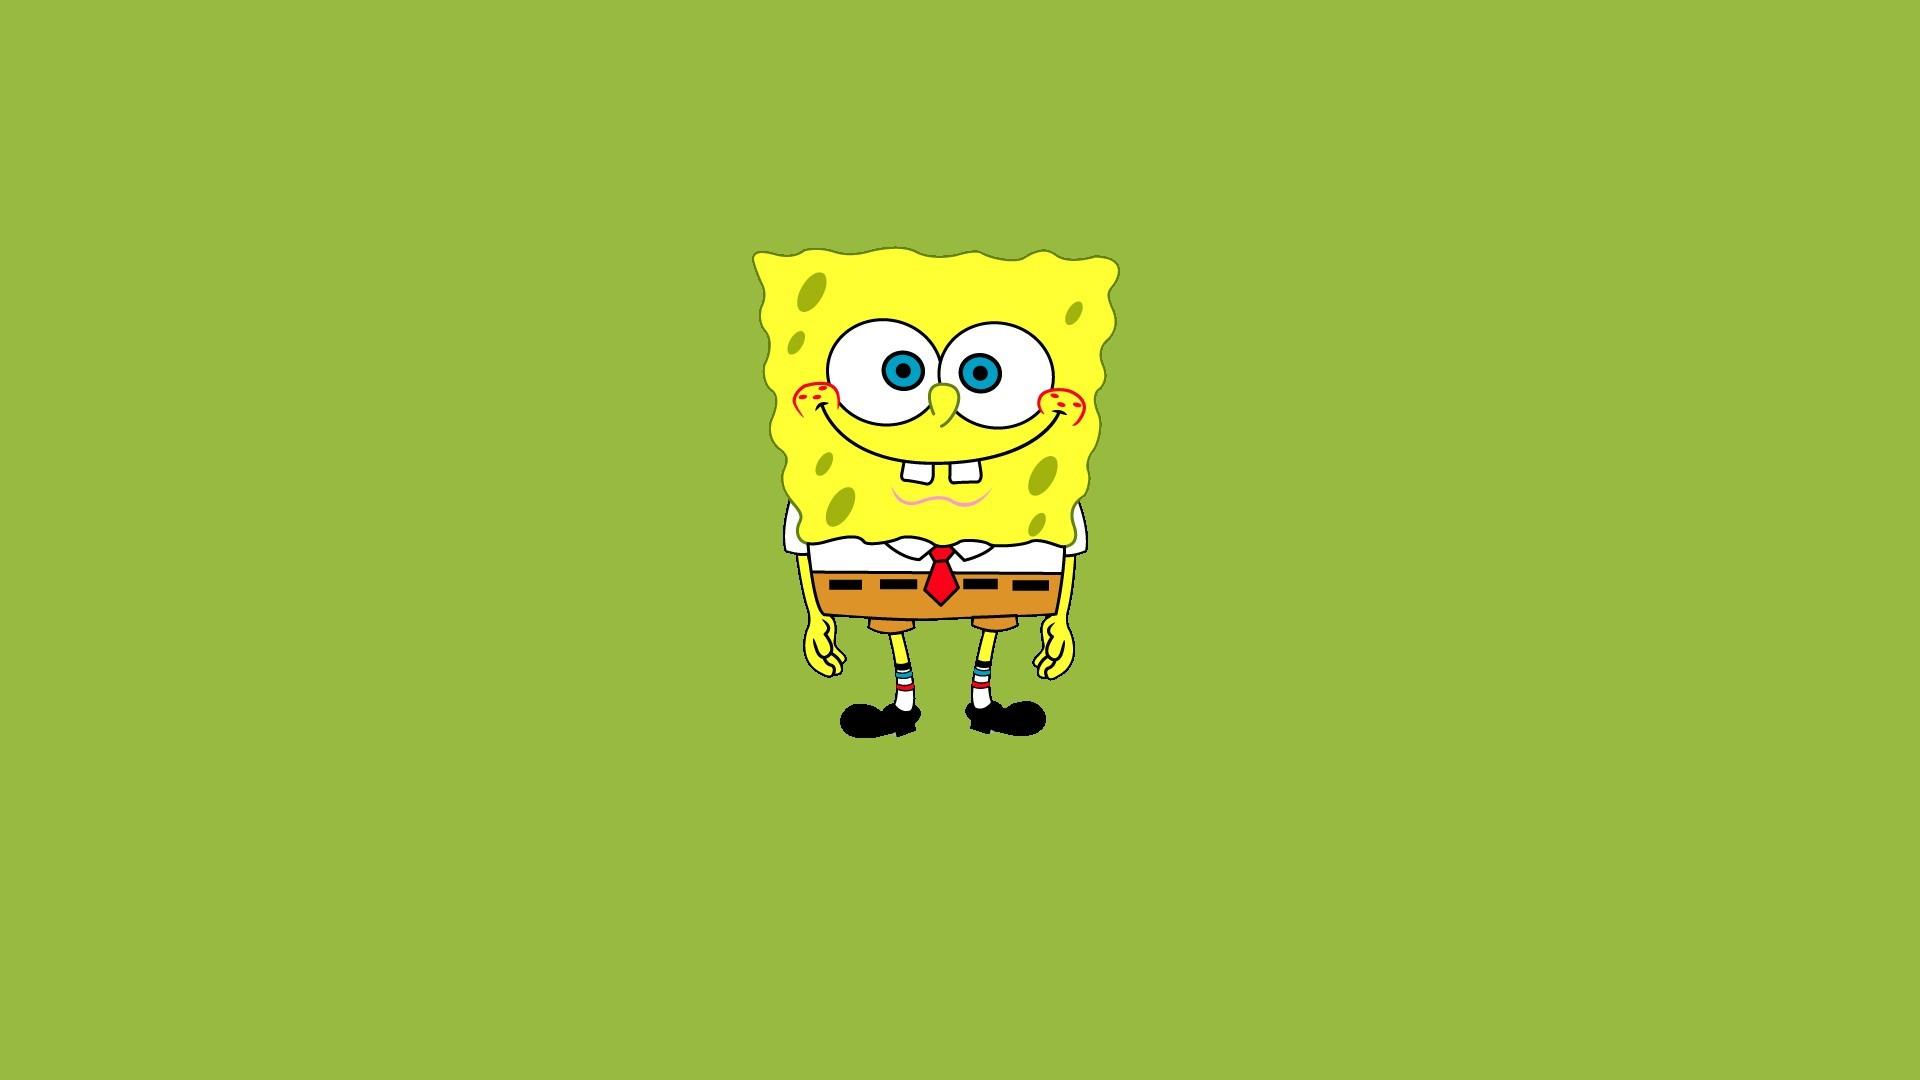 Spongebob Squarepants Minimalistic Wallpaper 141239